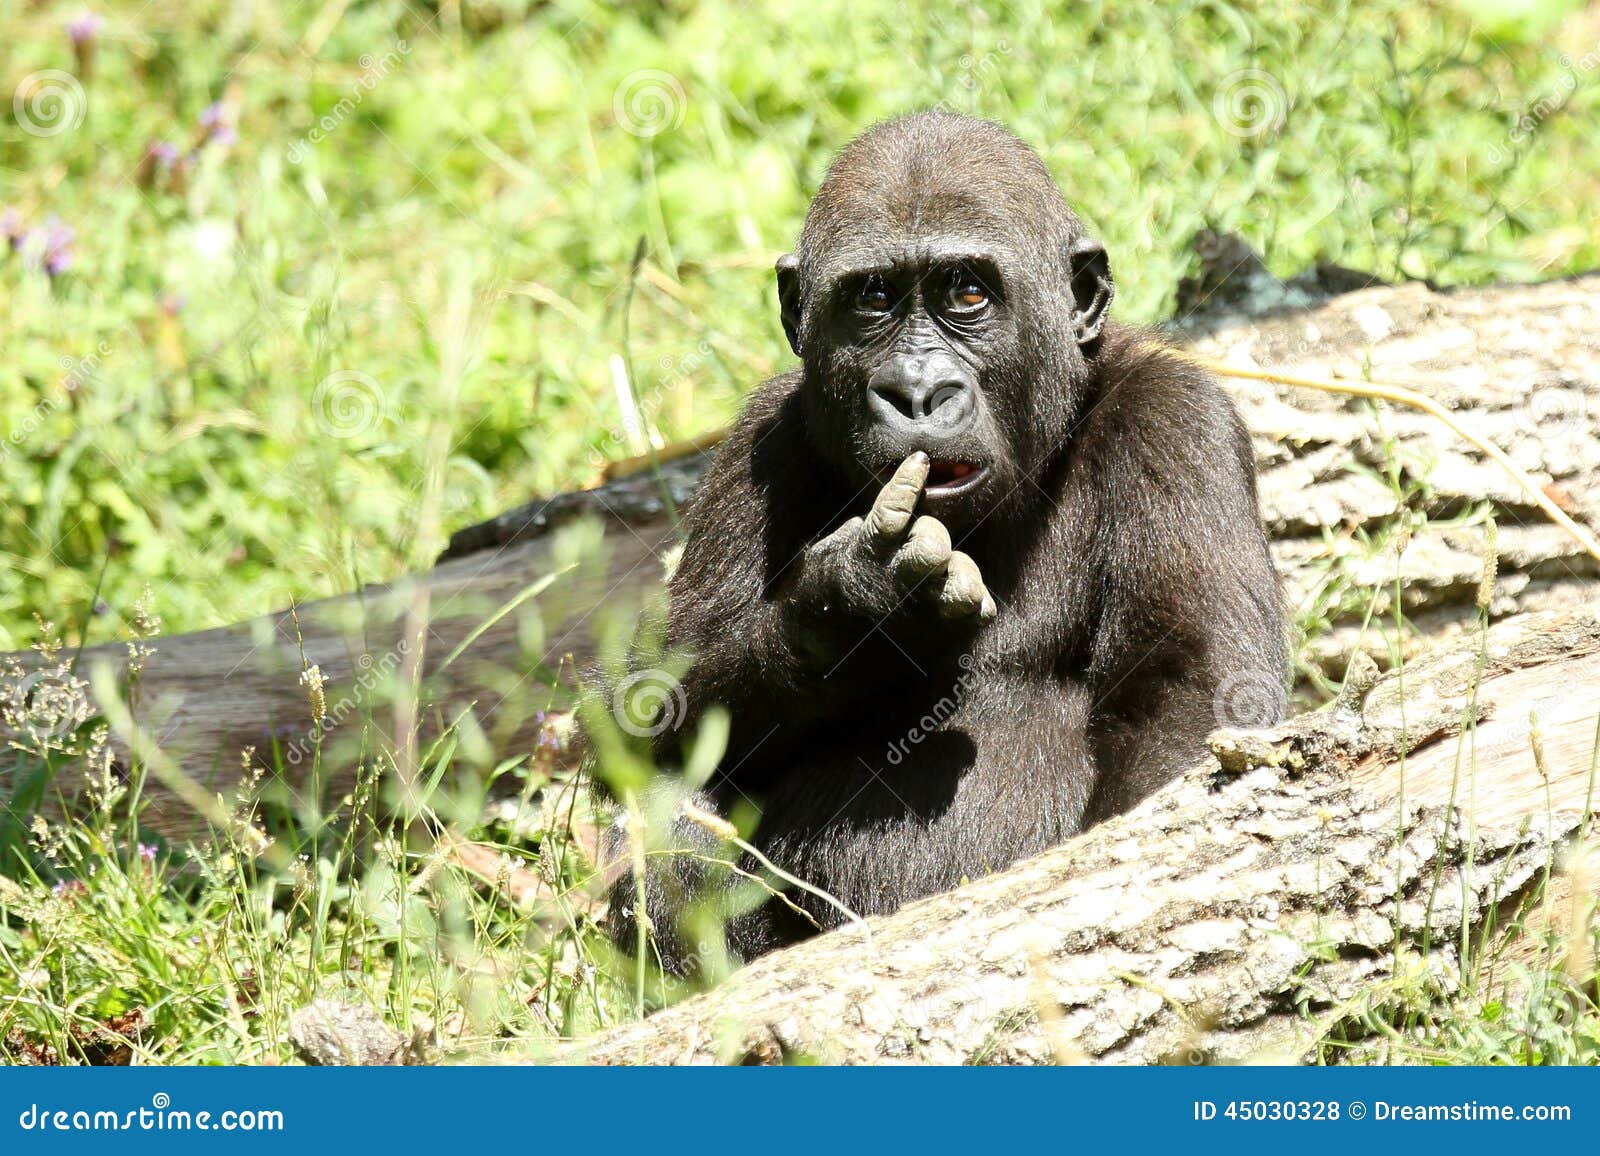 Humourous Gorilla stock photo. Image of mammal, park - 45030328